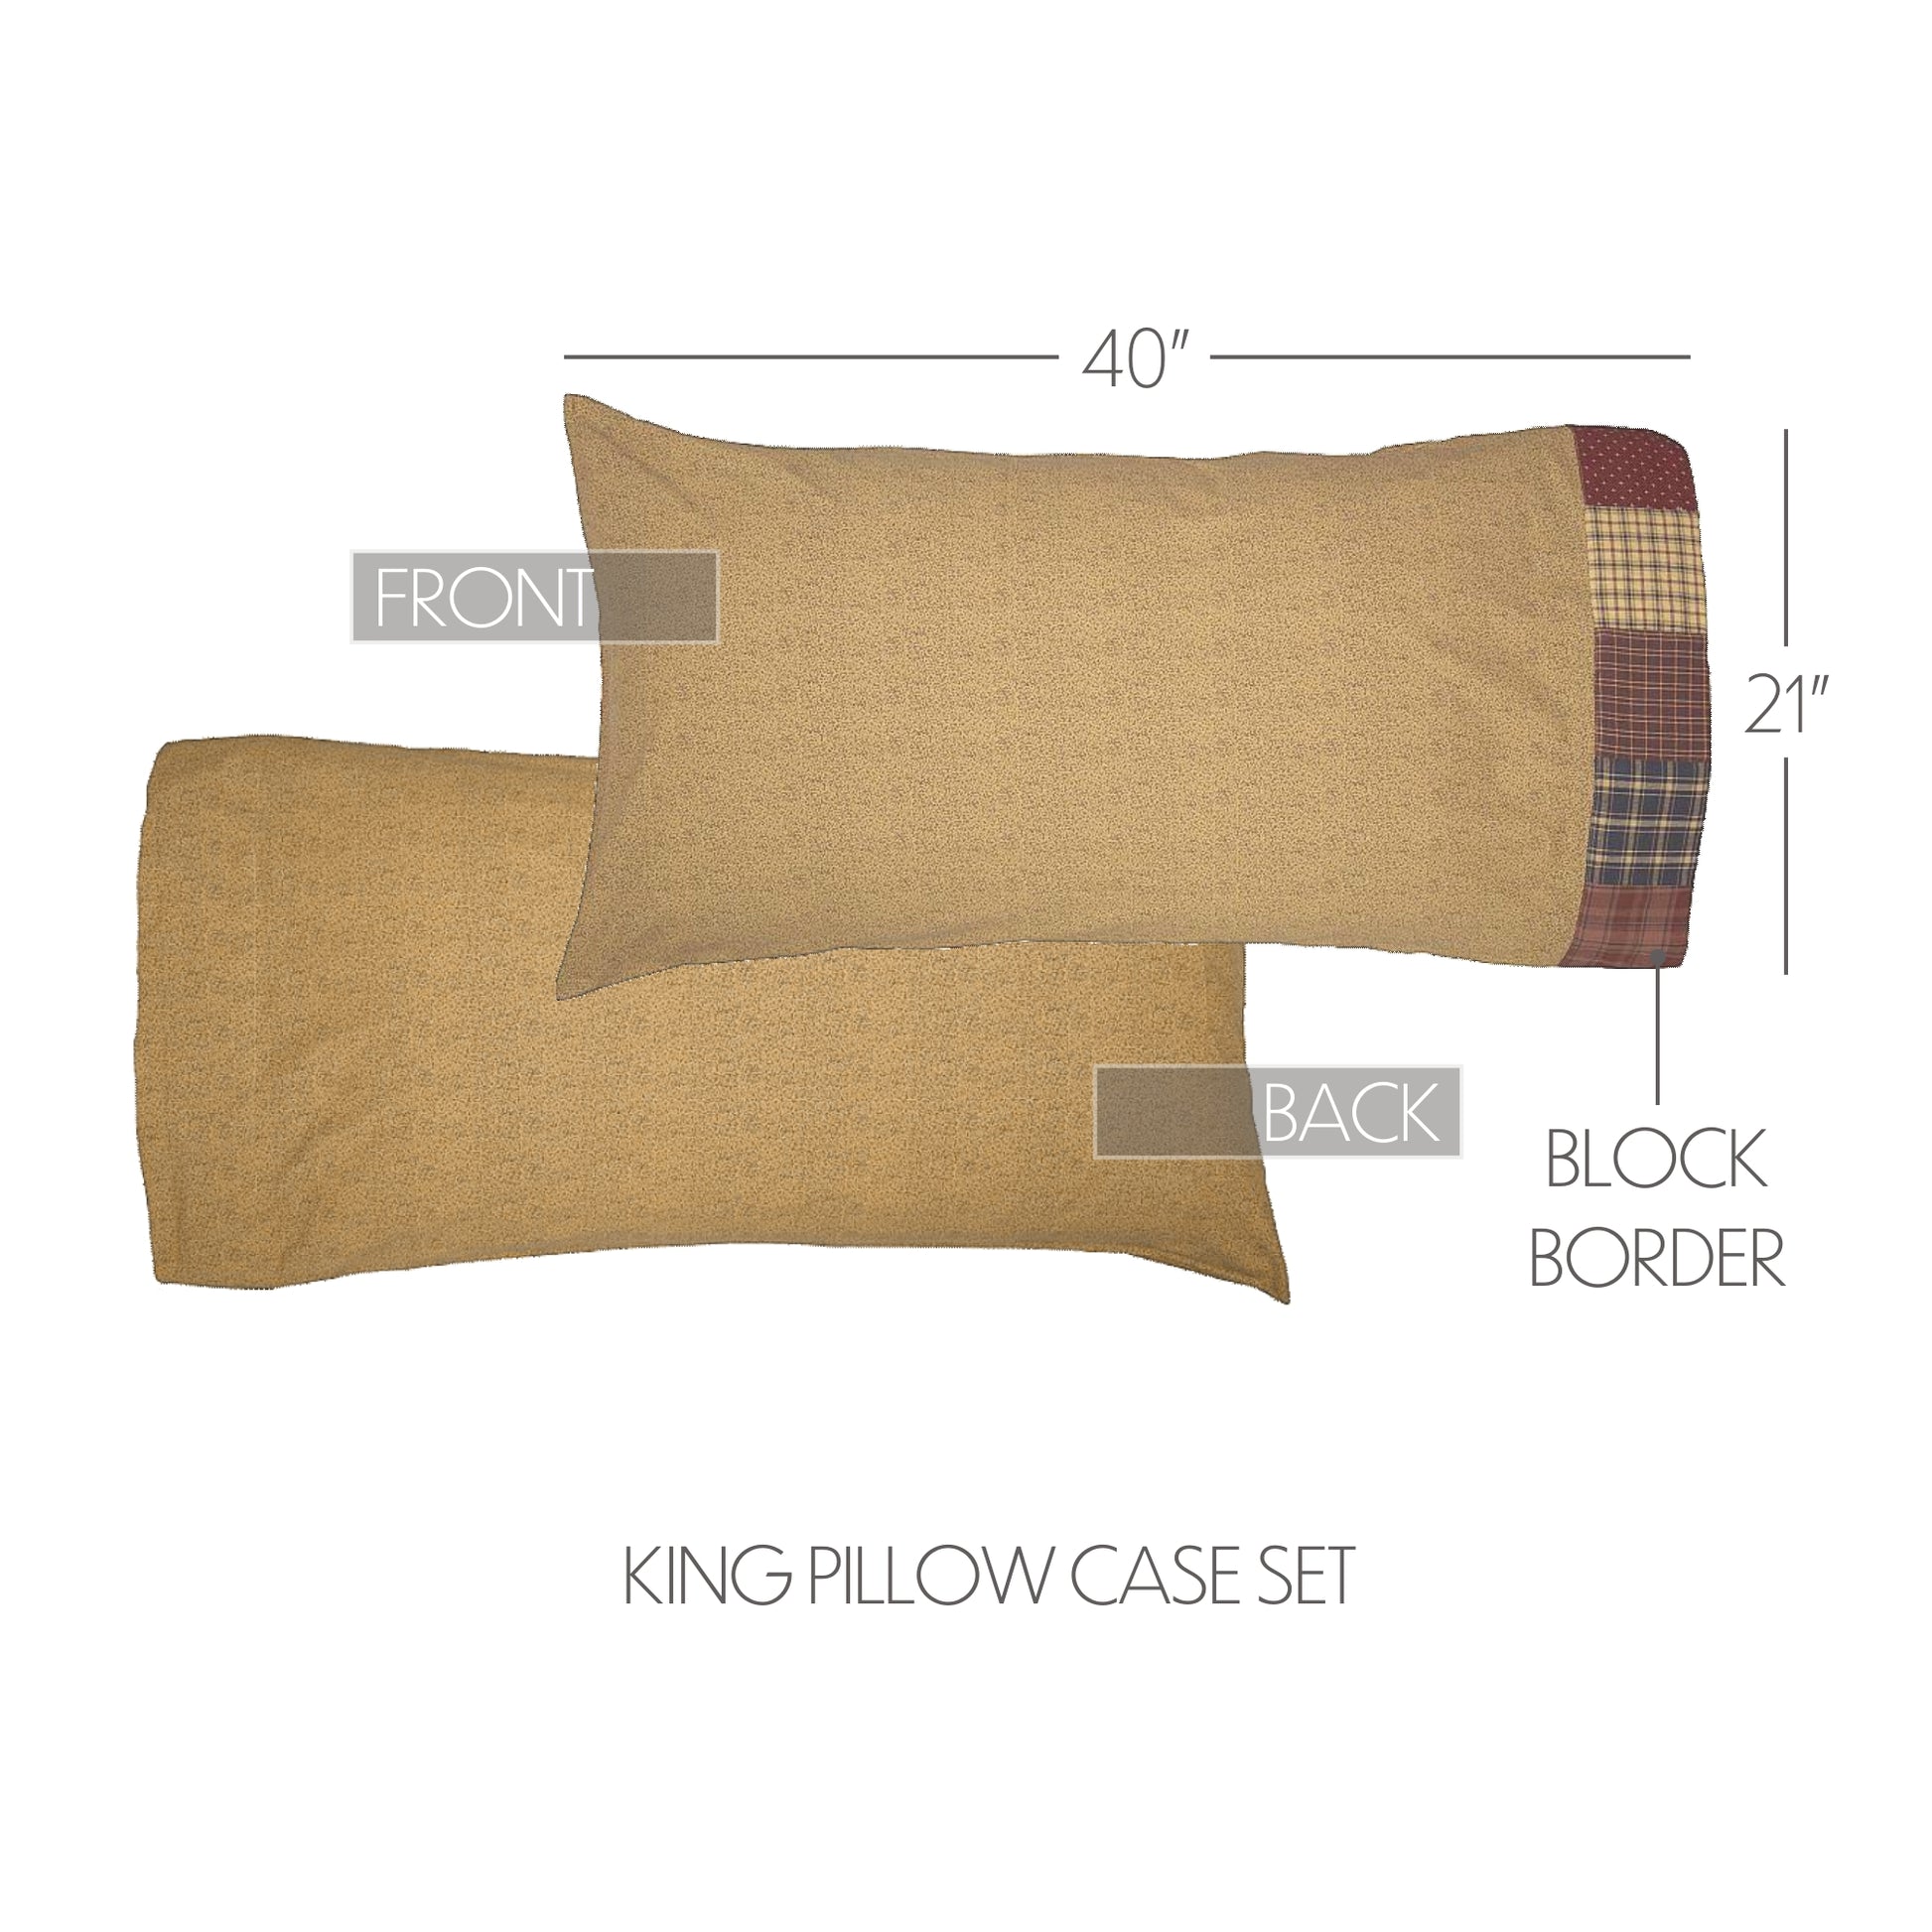 56735-Millsboro-King-Pillow-Case-Set-of-2-21x40-image-1